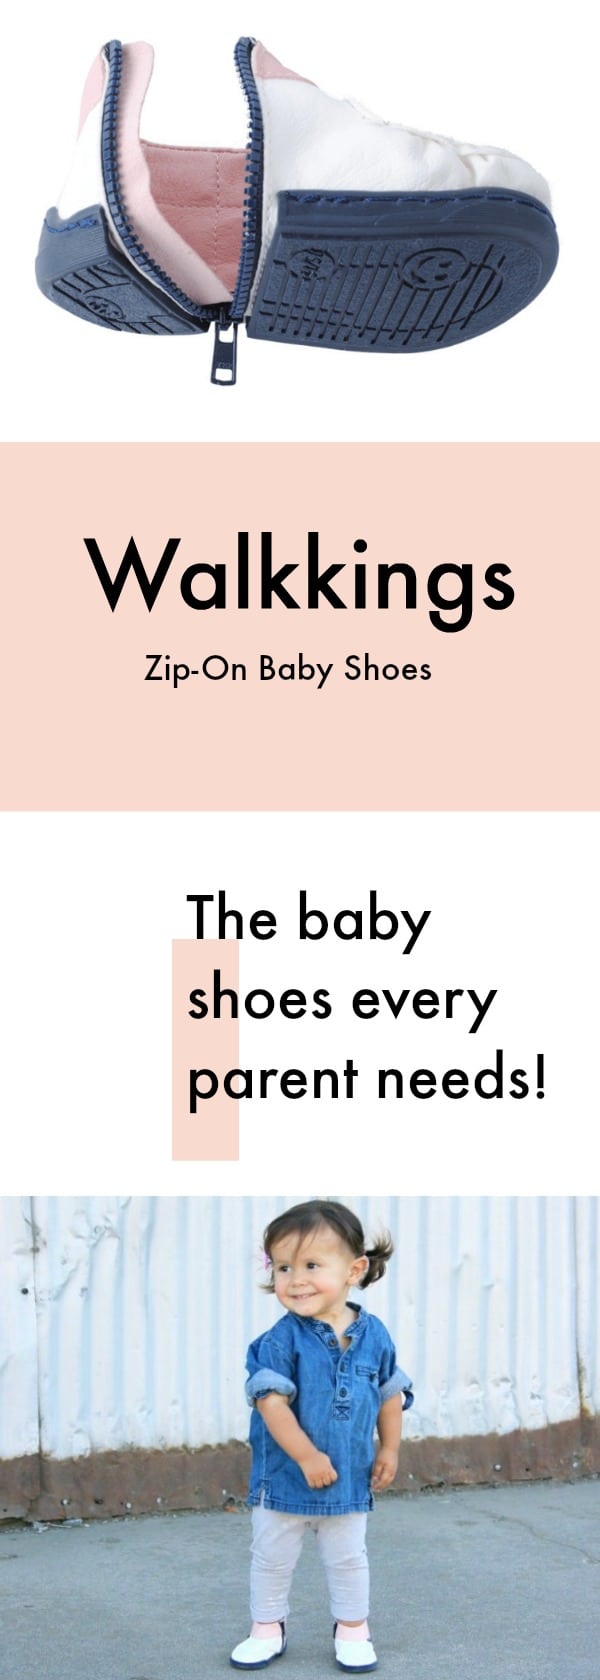 Walkkings Zip-On Baby Shoes